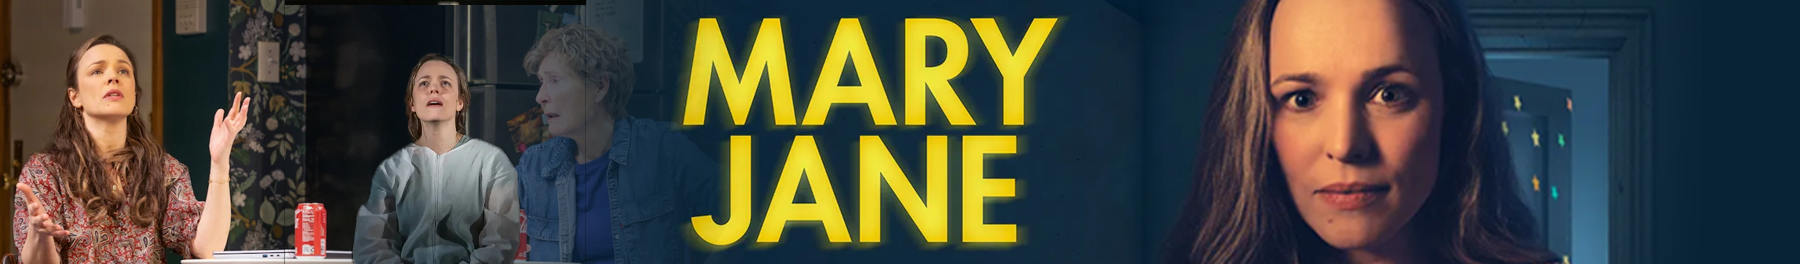 Mary Jane on Broadway